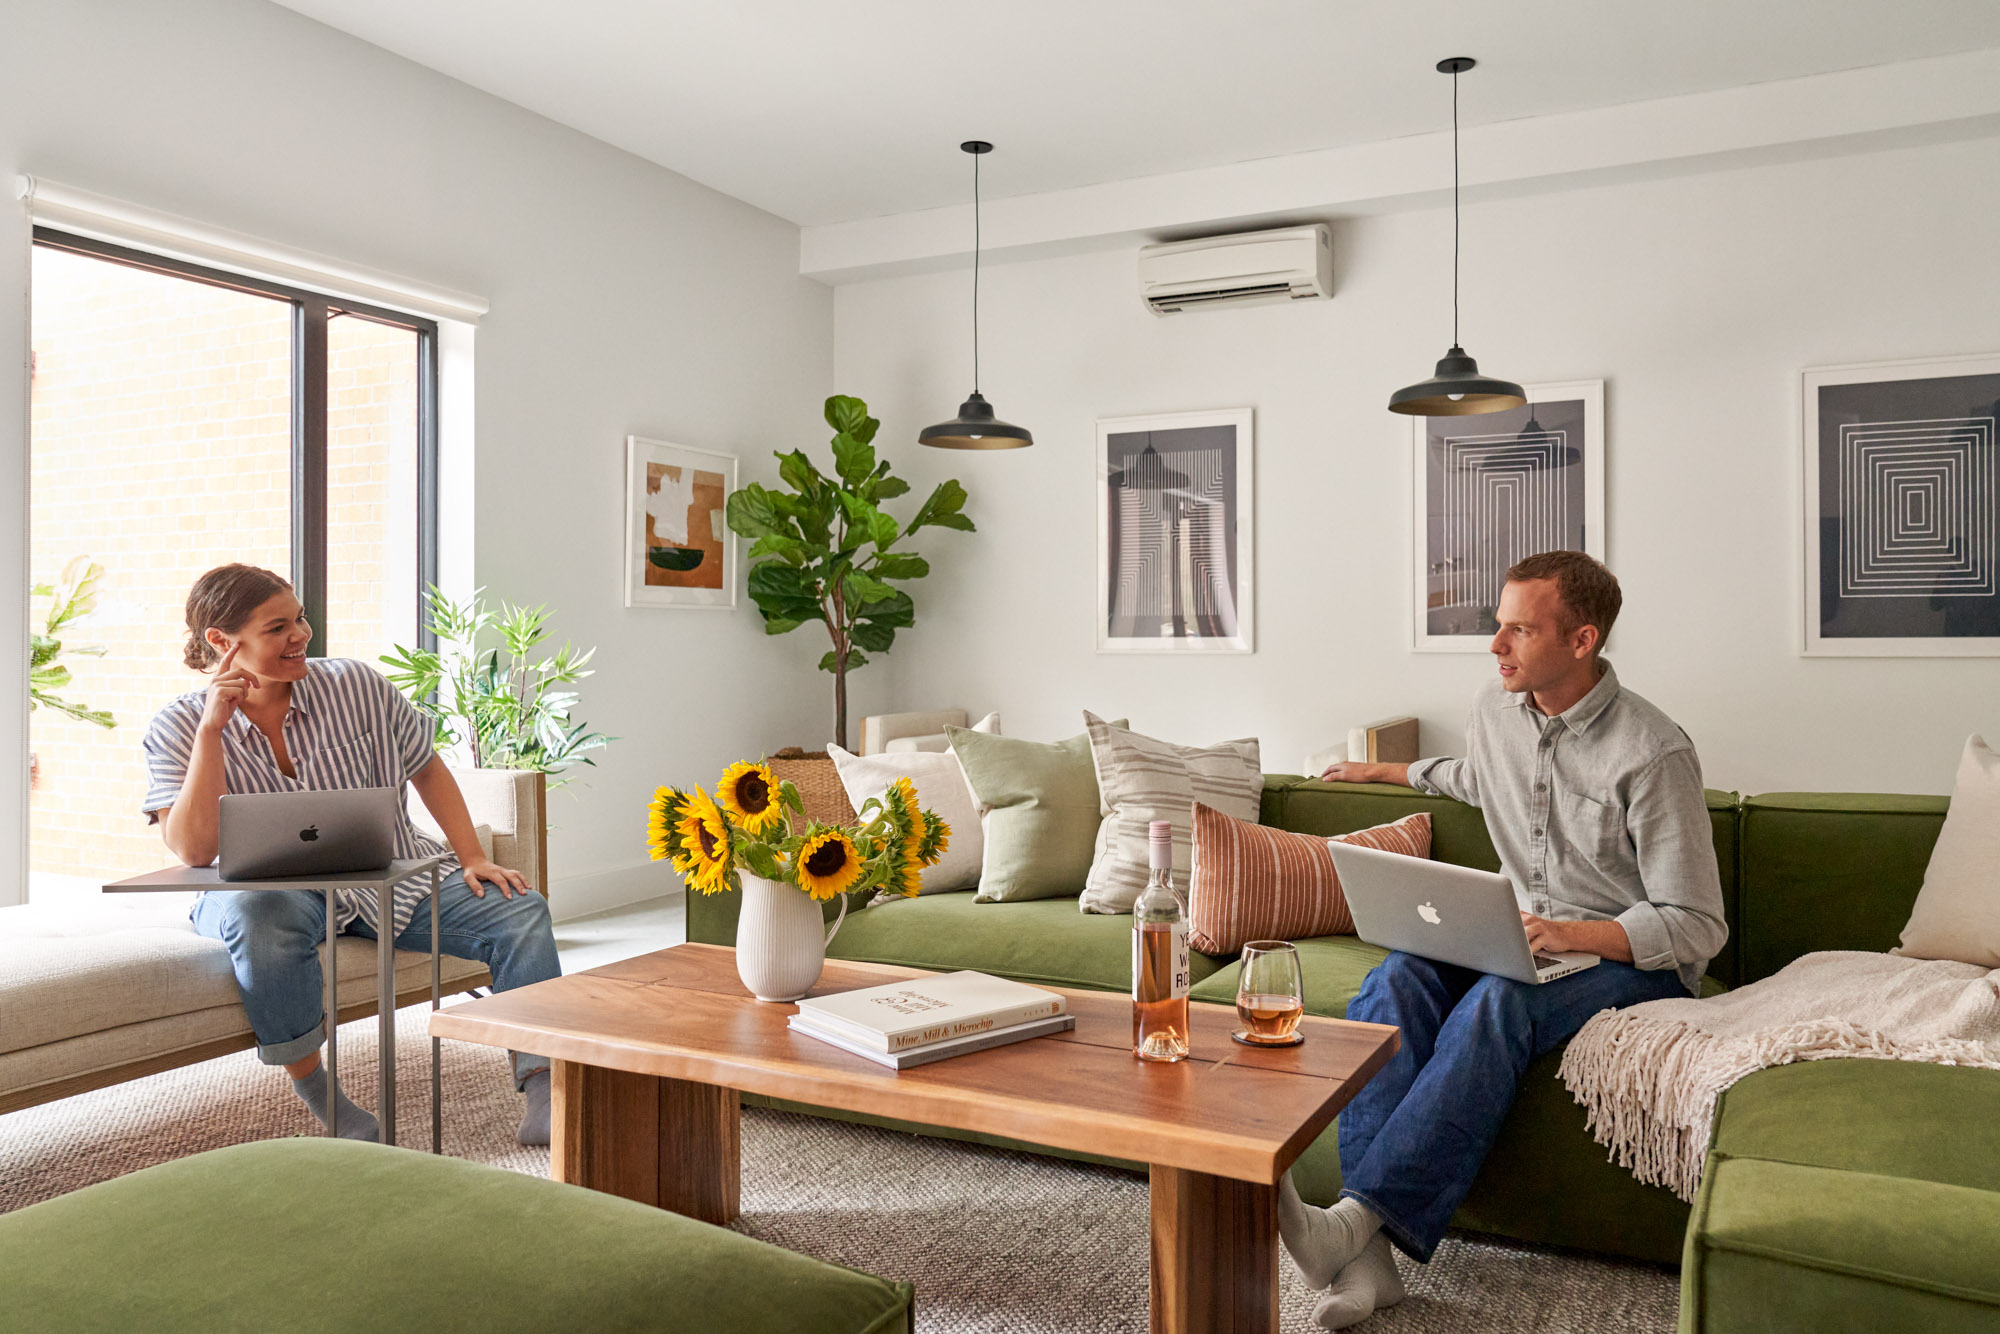  Apartments For Rent In Pilsen Craigslist for Living room